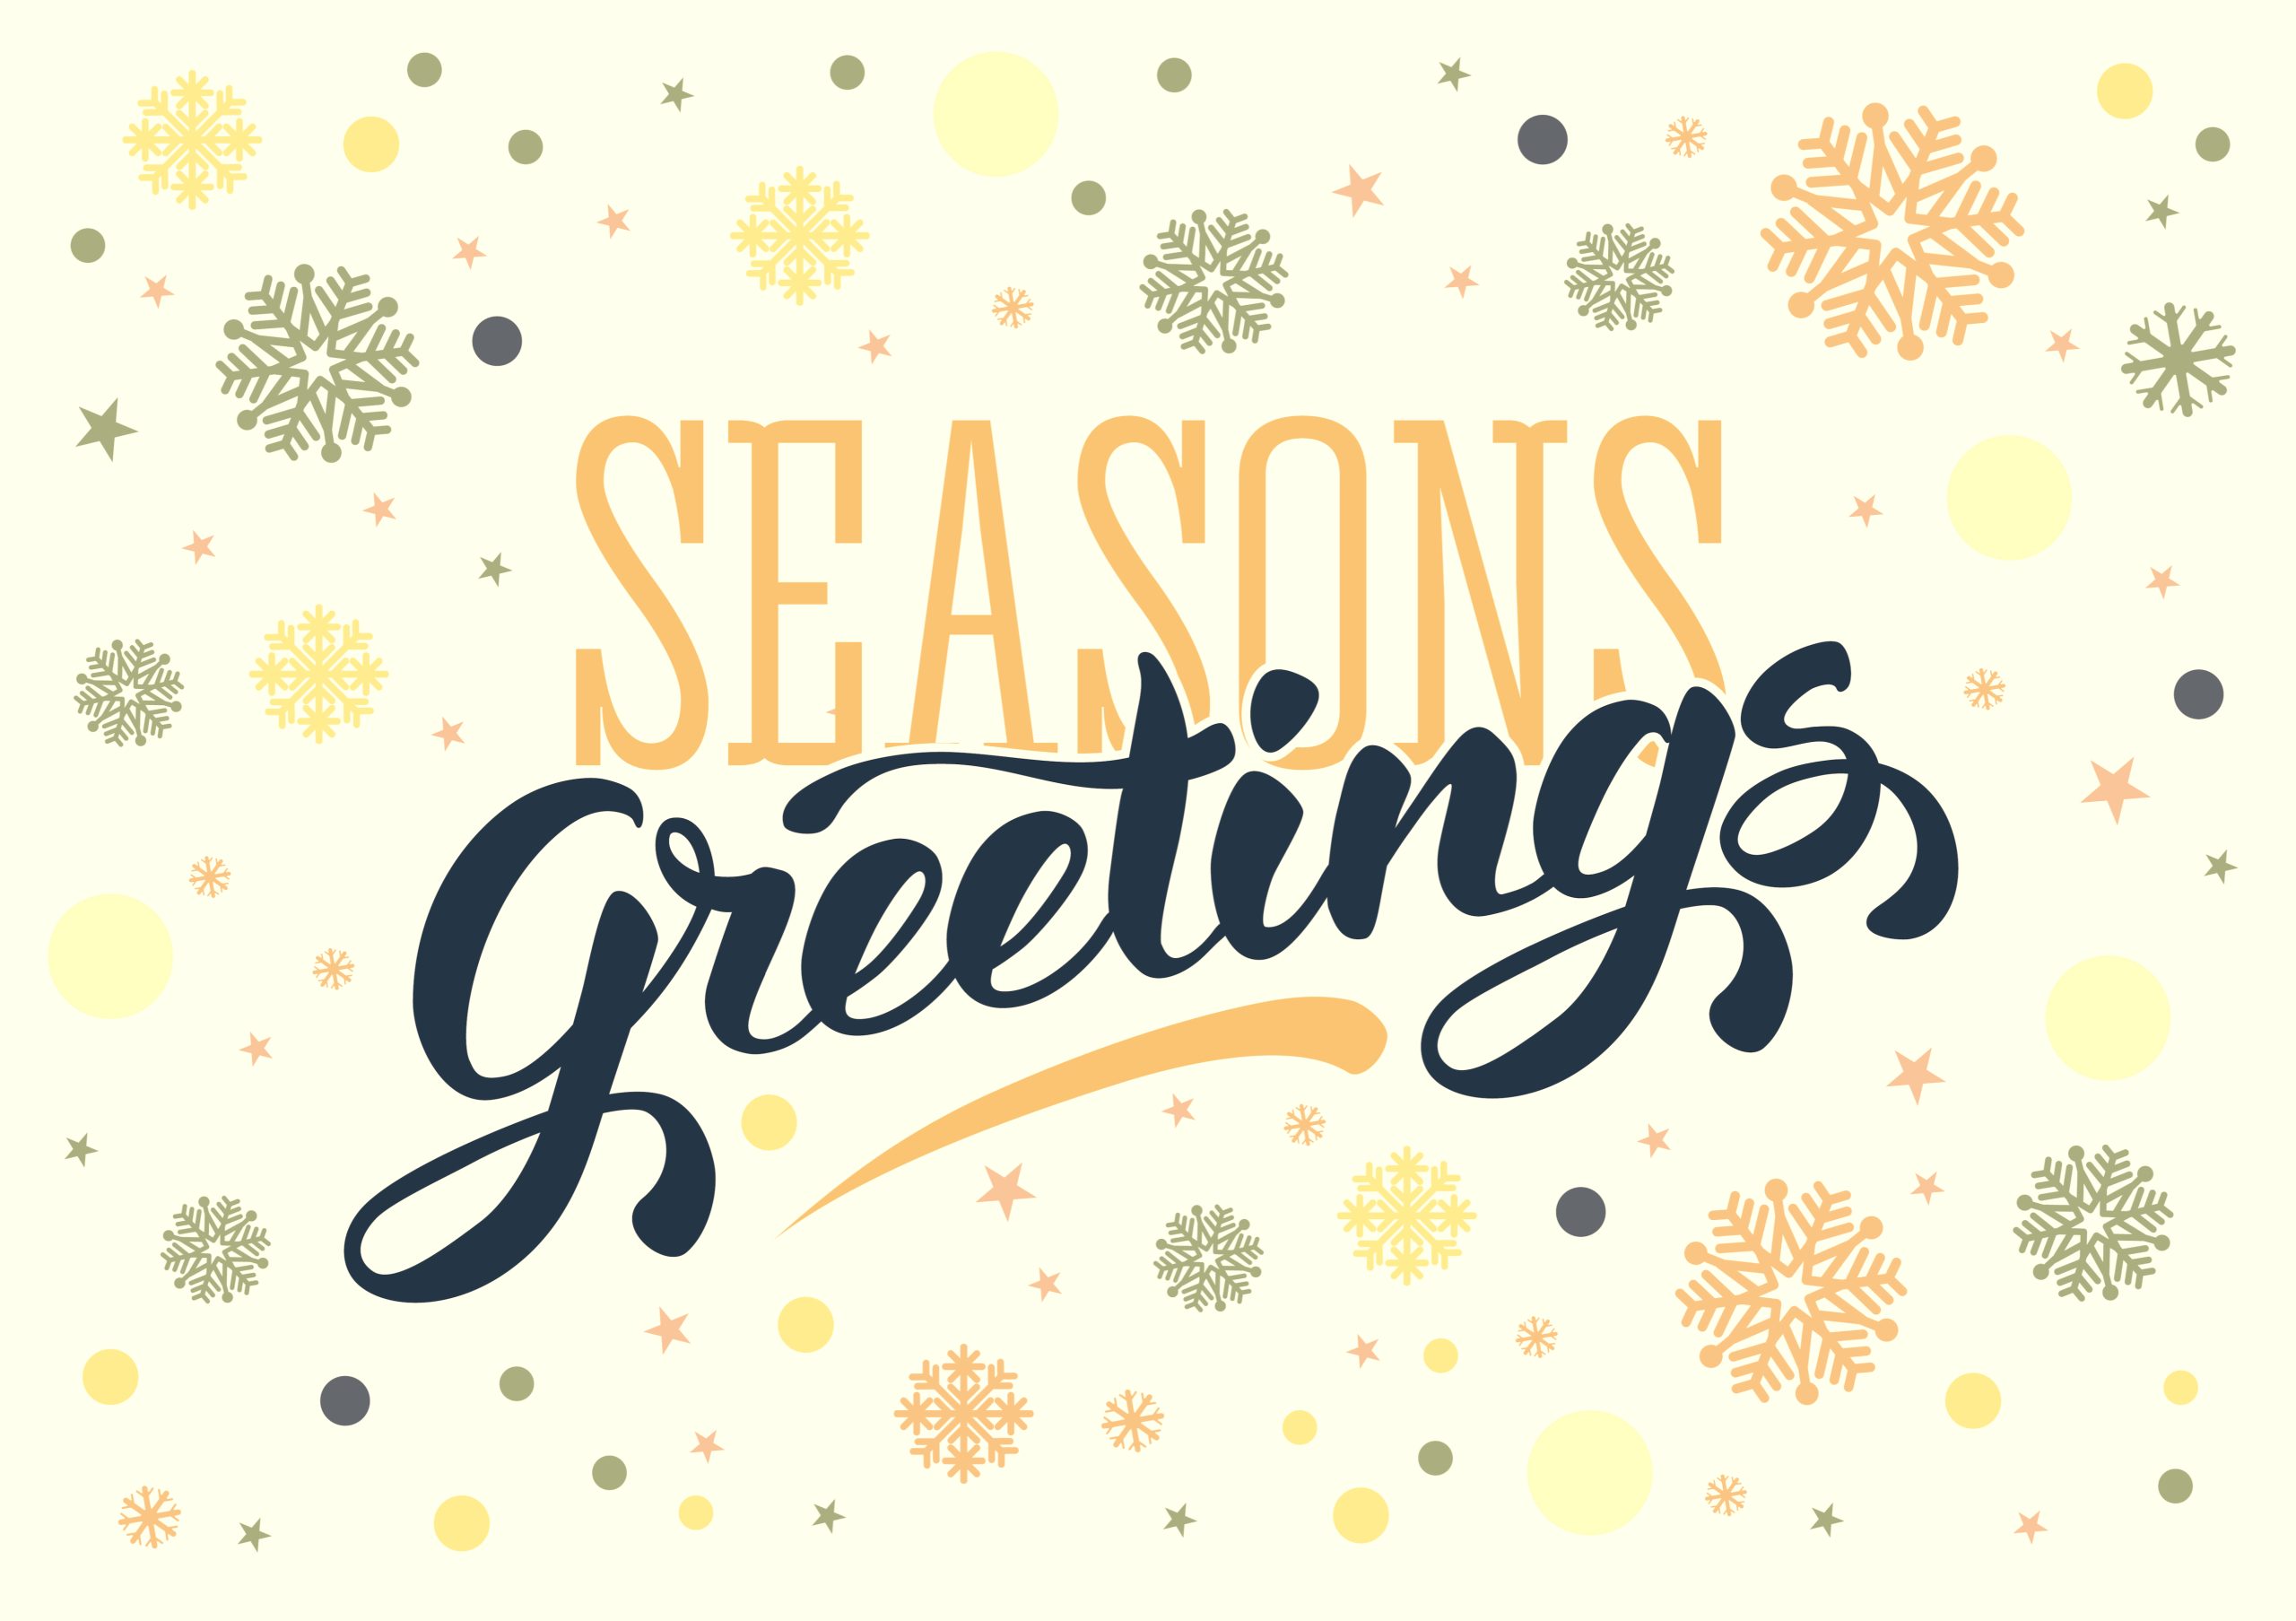 Seasons Greetings from OSP!